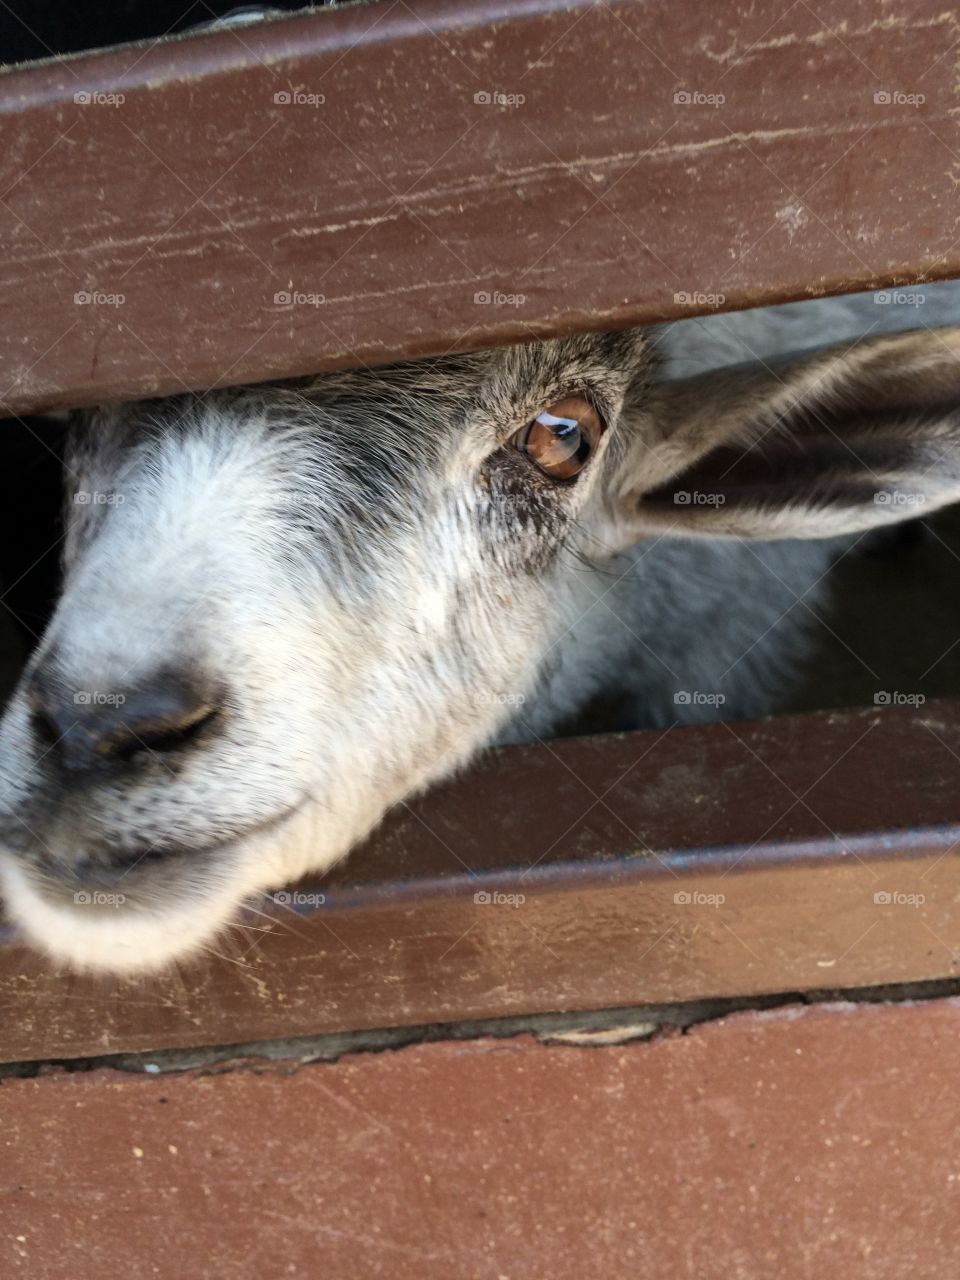 Goat!. Wagon Trails Animal Park in Vienna, Ohio. Petting zoo. 
